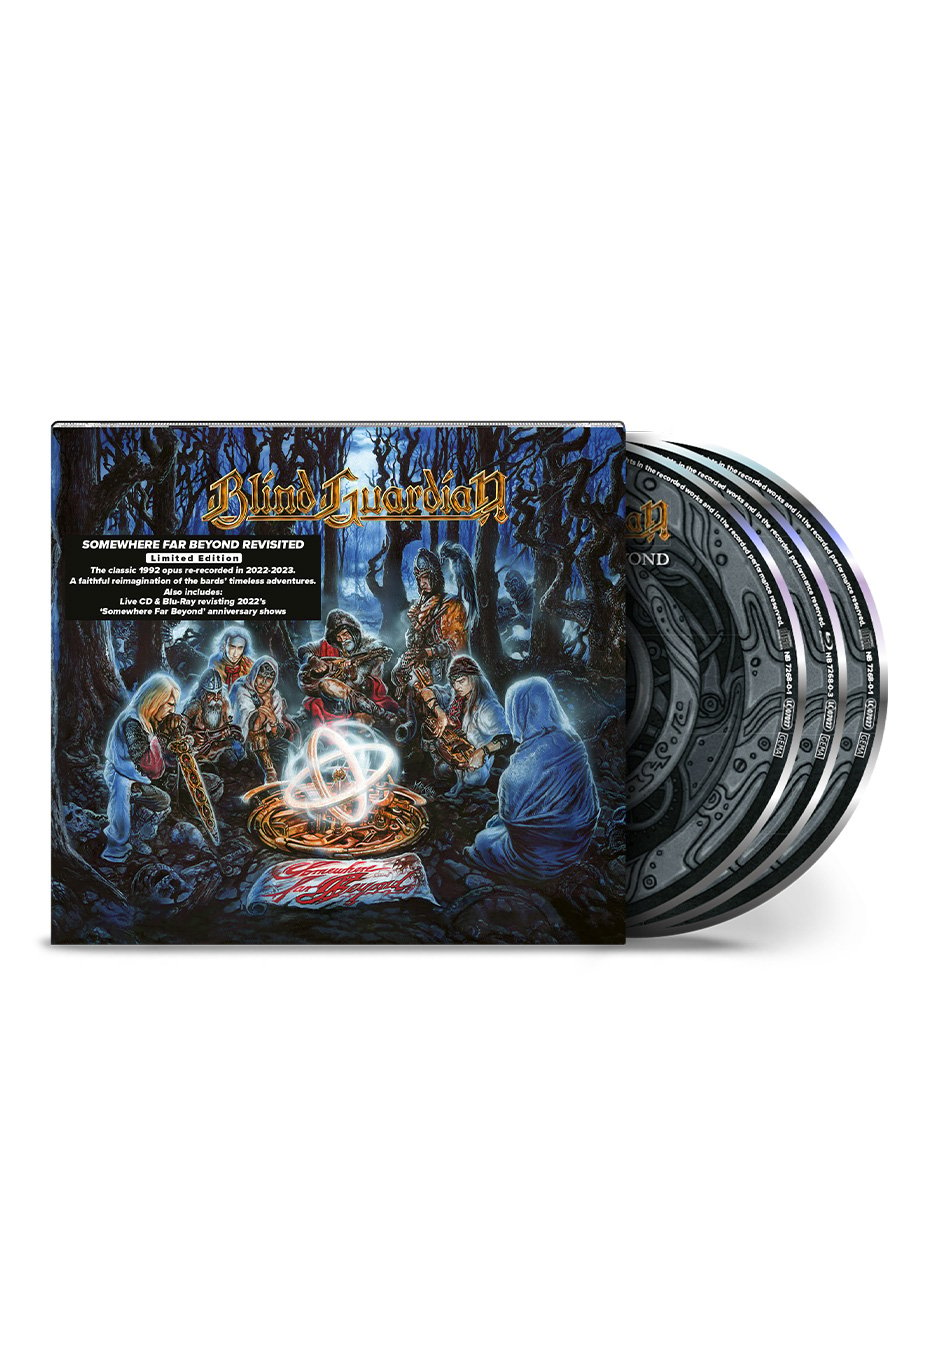 Blind Guardian - Somewhere Far Beyond Revisited Ltd. Edition - Digipak 2 CD + Blu Ray